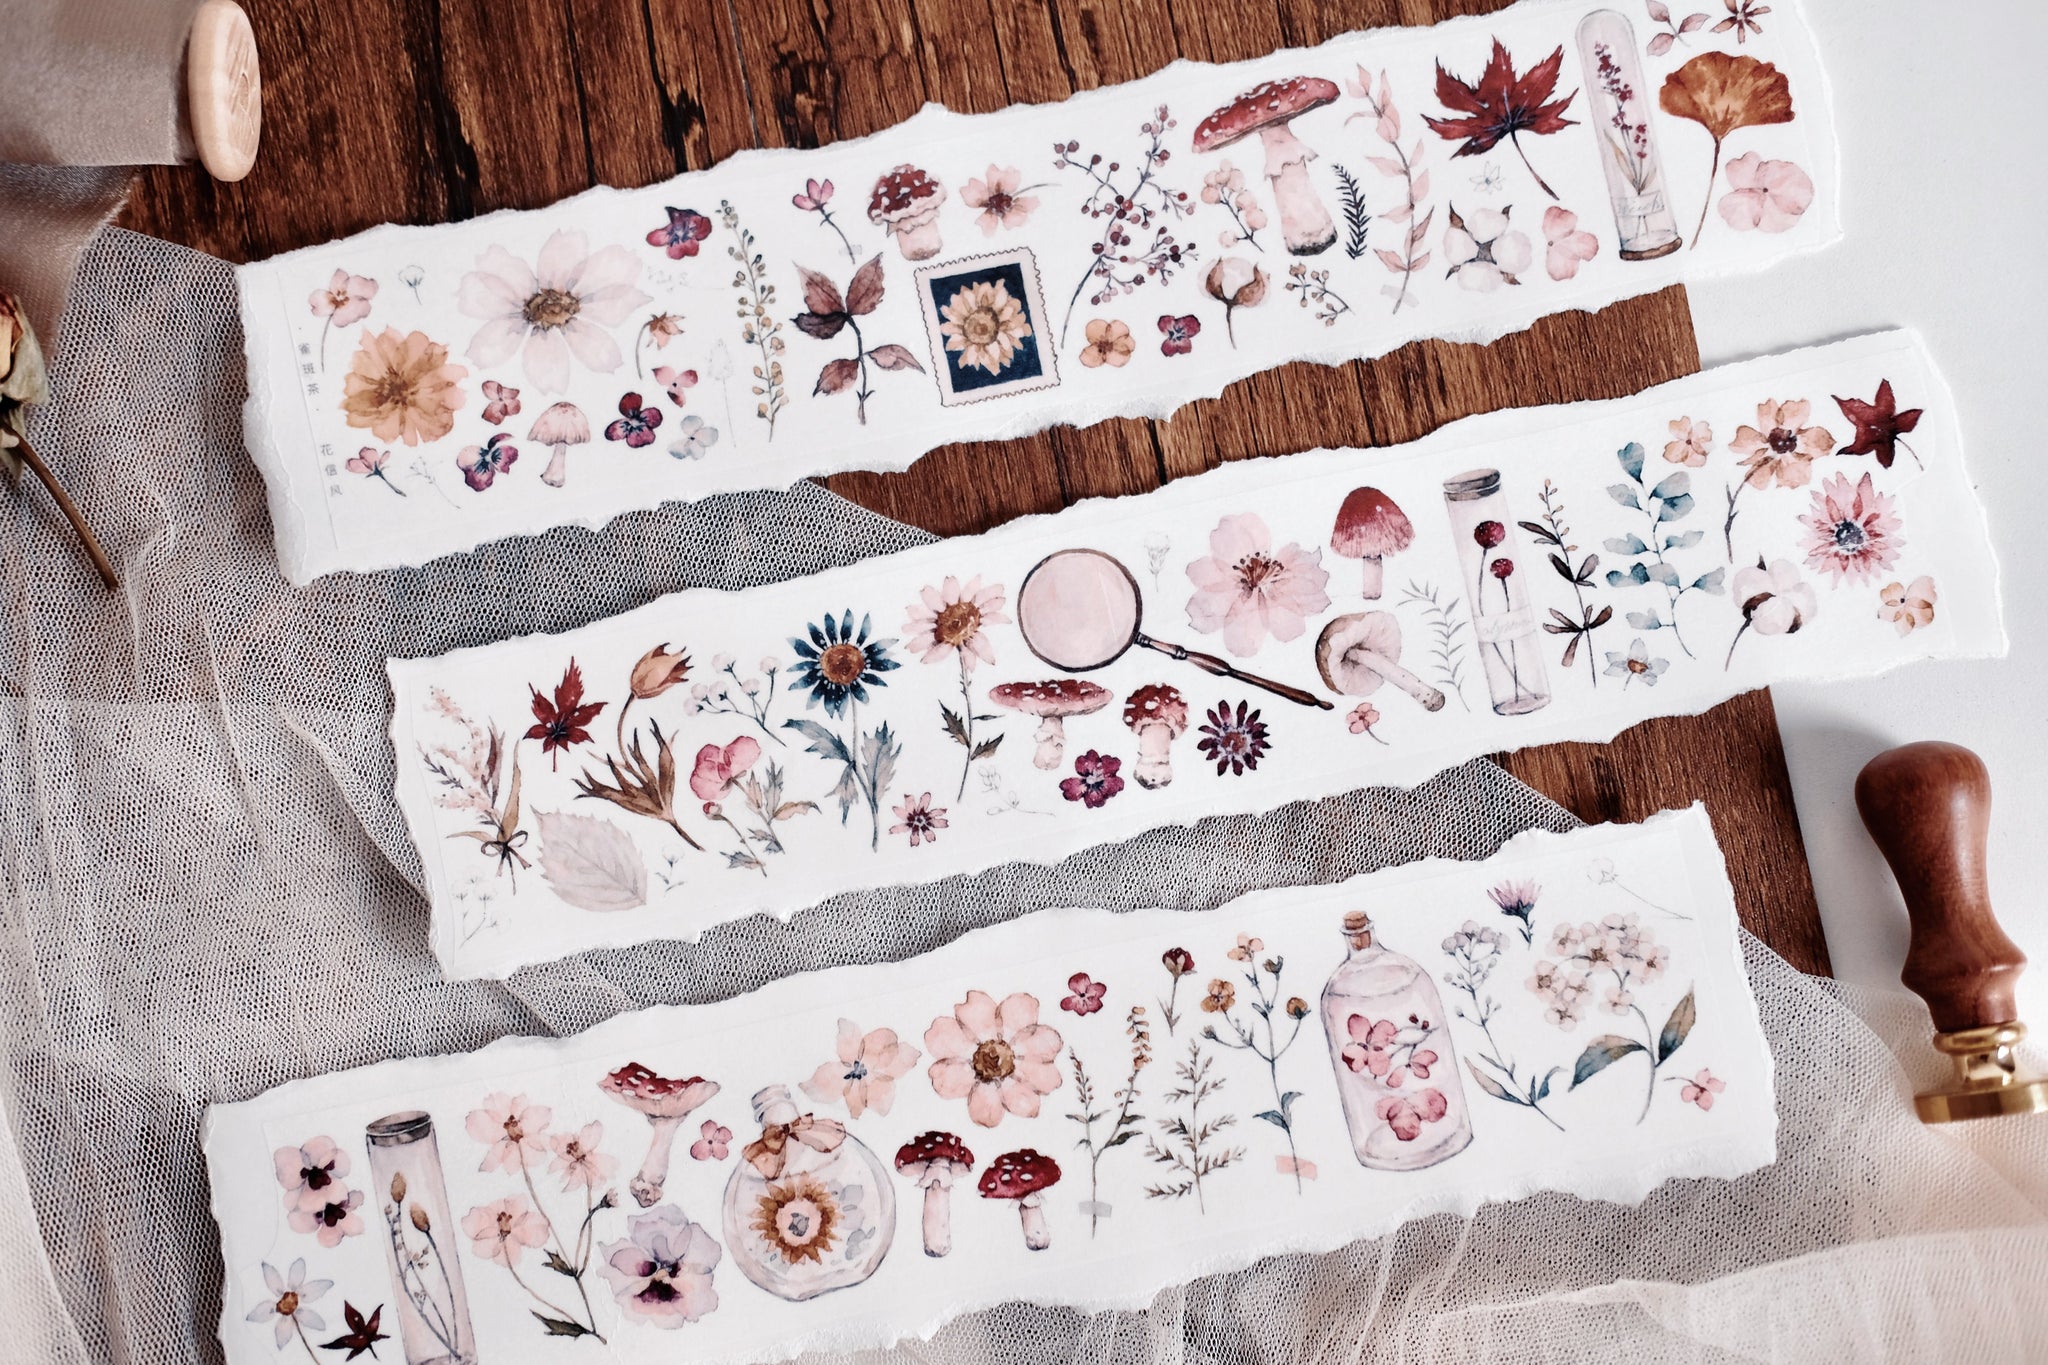 Freckles Tea Tape Sample: Flower Greeting